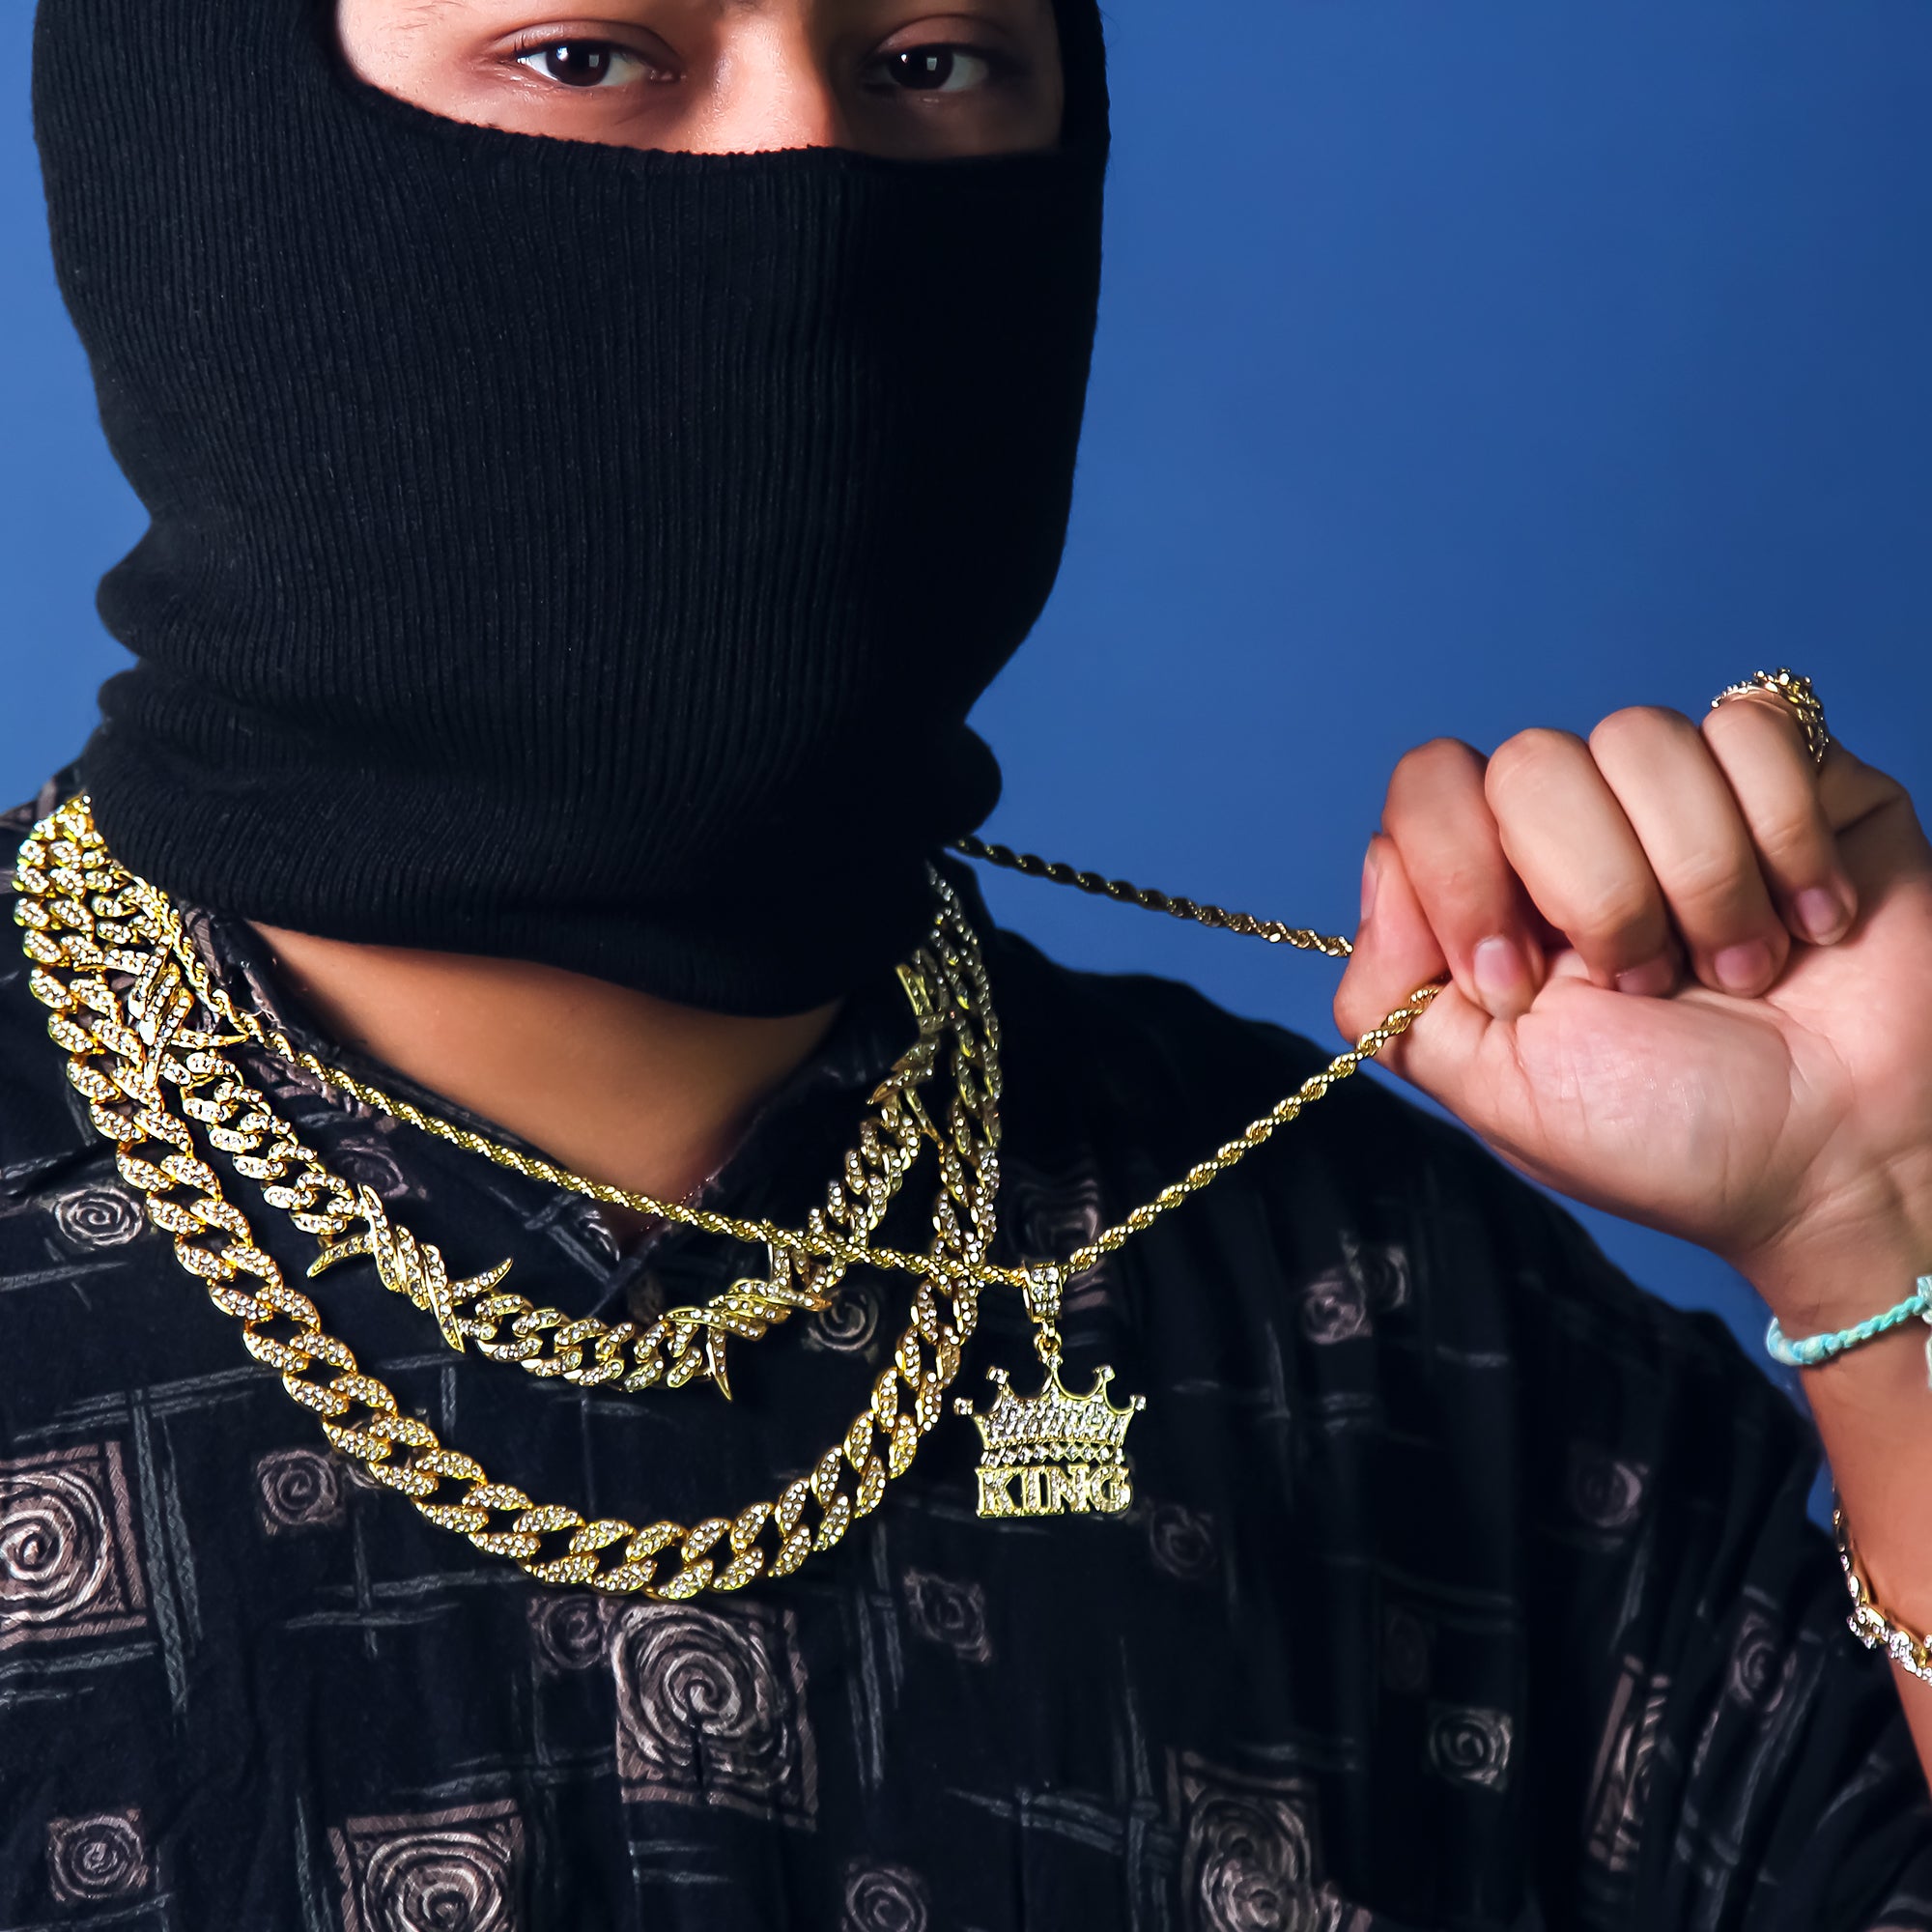 Crown King Pendant Rope Chain Men's Hip Hop 18k Cz Jewelry Necklace